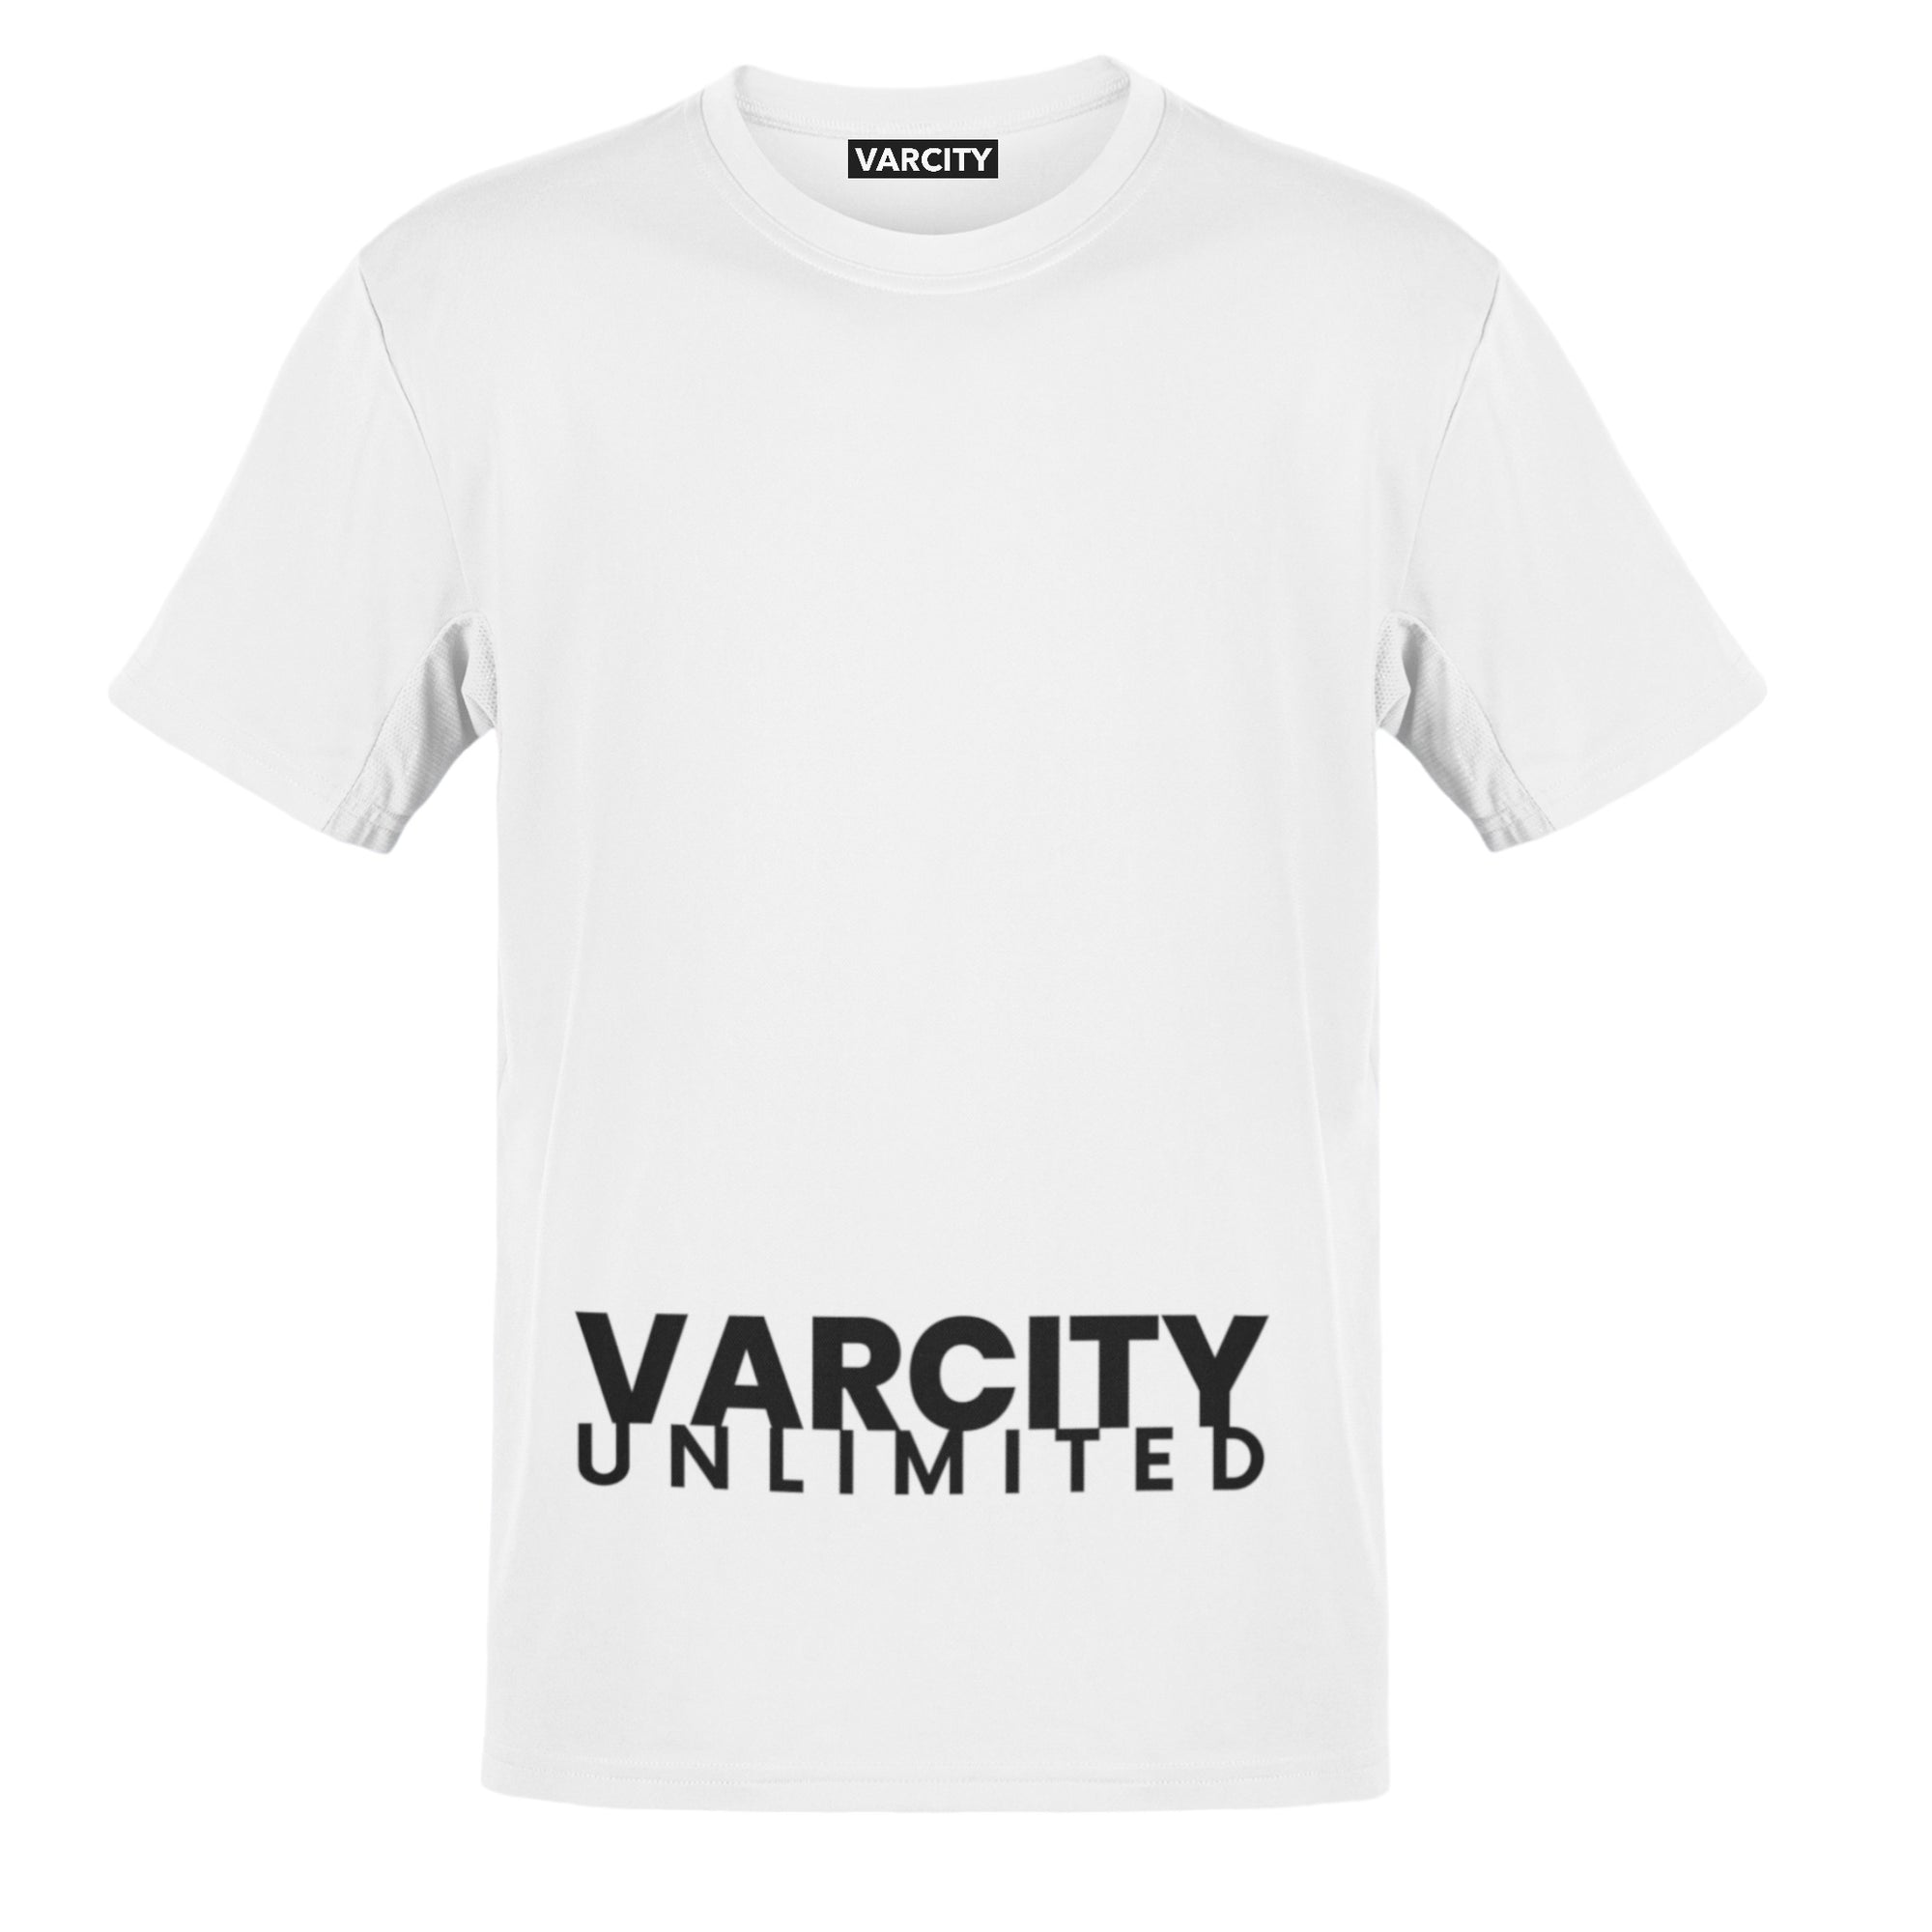 Varcity Unlimited Premium Statement T Shirt White